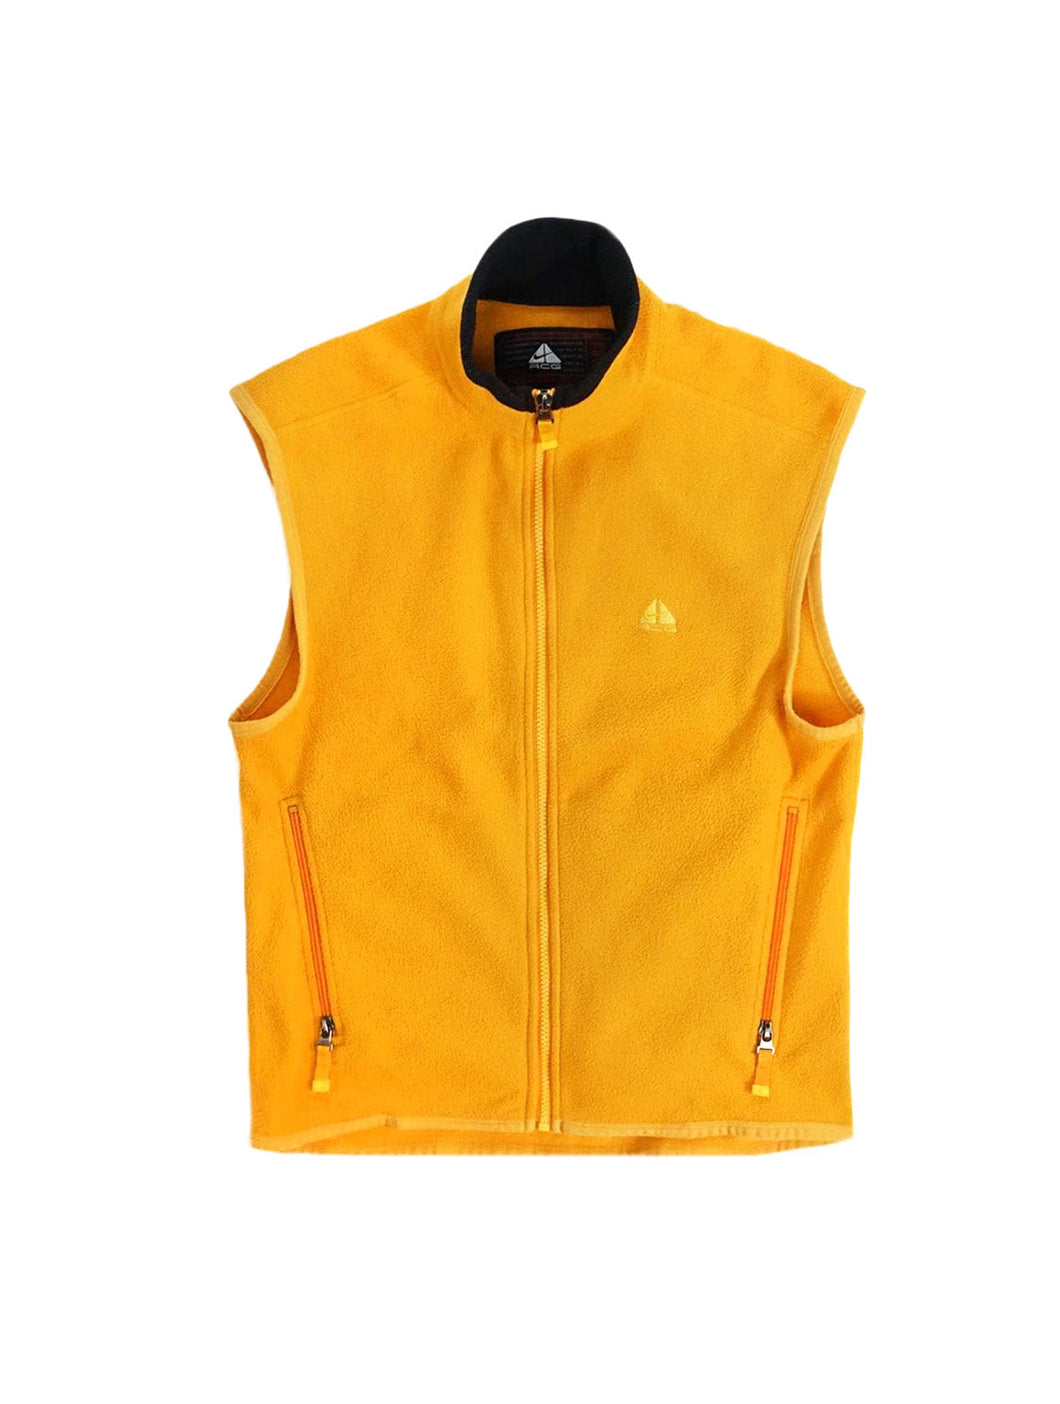 Nike ACG Orange Yellow Fuzzy Technical Vest